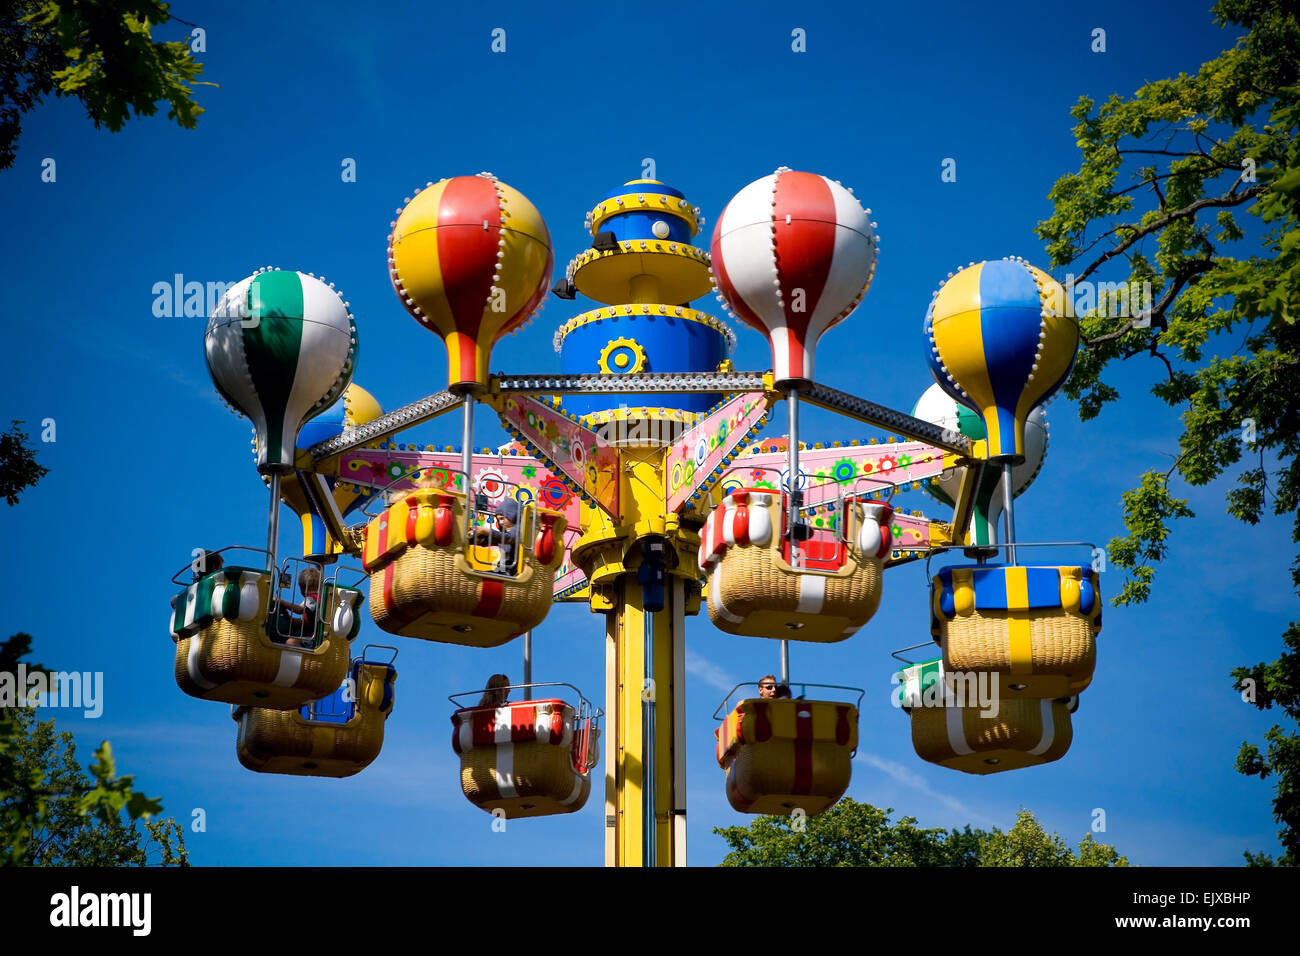 The balloons in Bakken amusement park Stock Photo